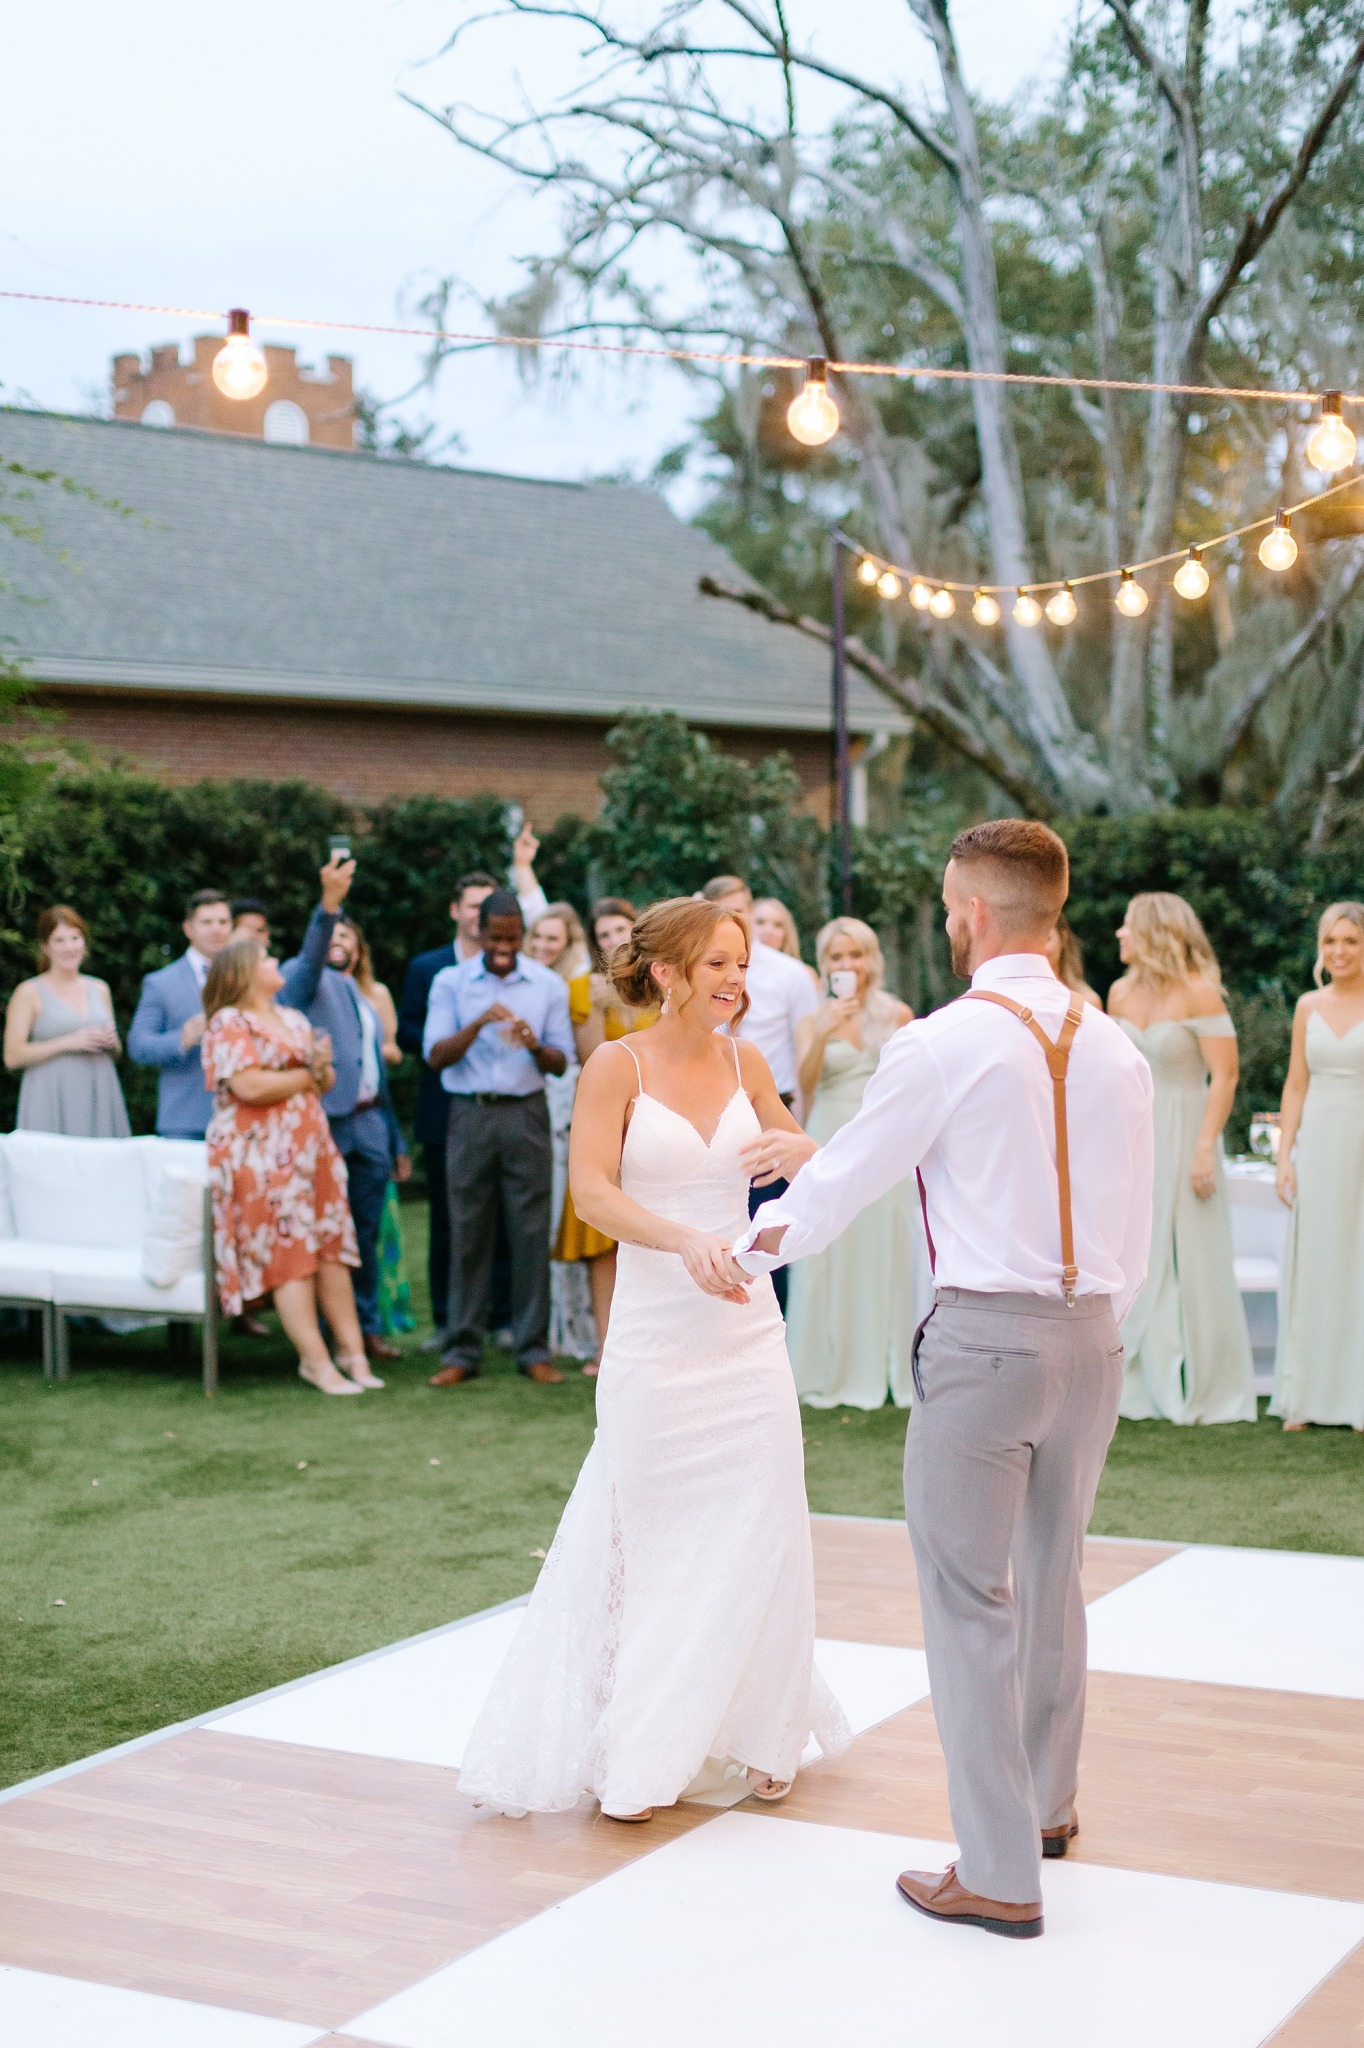 newlyweds first dance at garden wedding reception